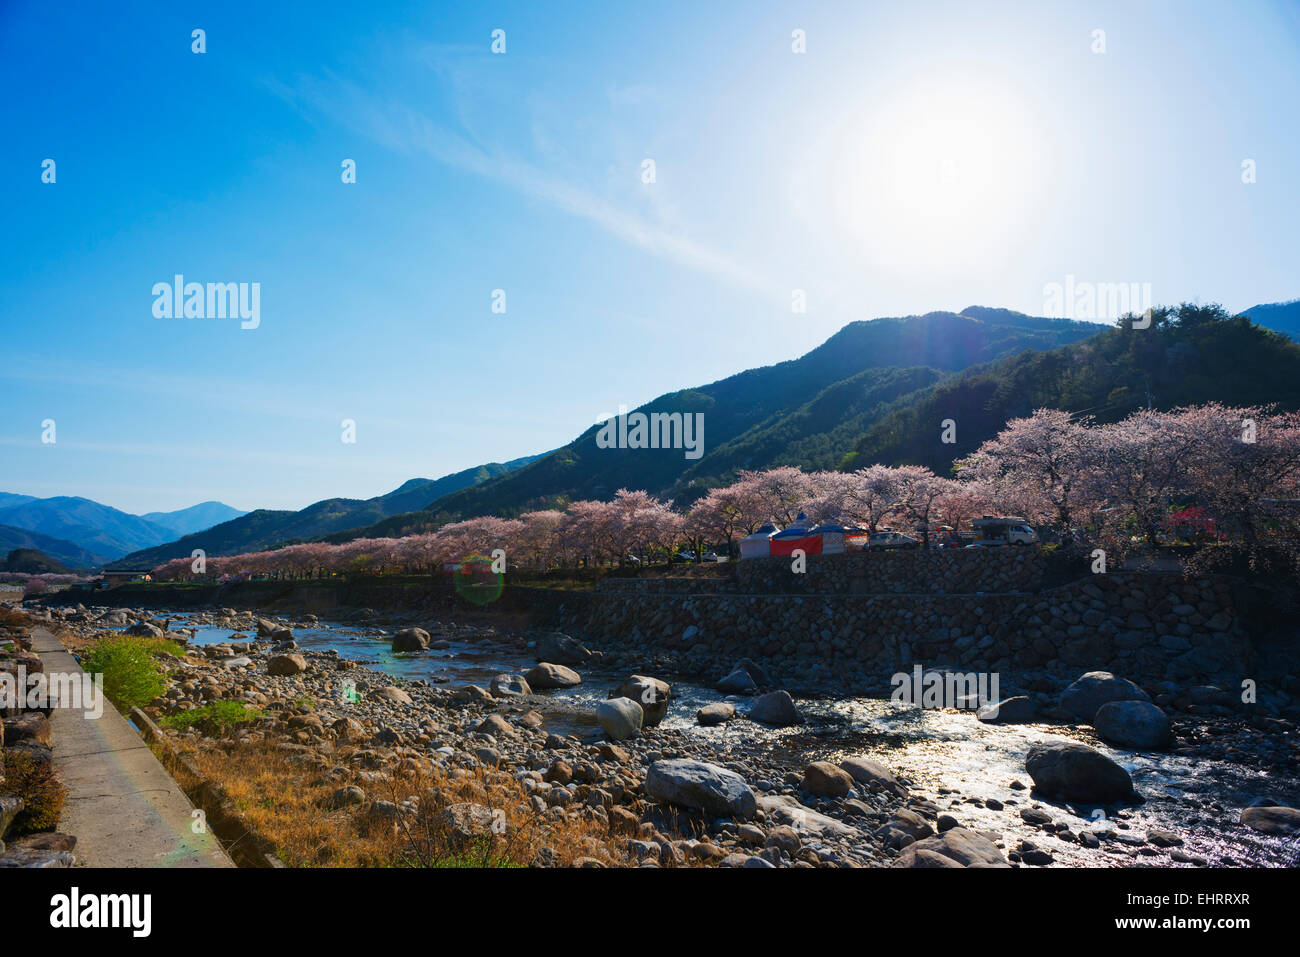 Asia, Republic of Korea, South Korea, Gyeongsangnam-do, Jirisan National Park, spring blossom Stock Photo